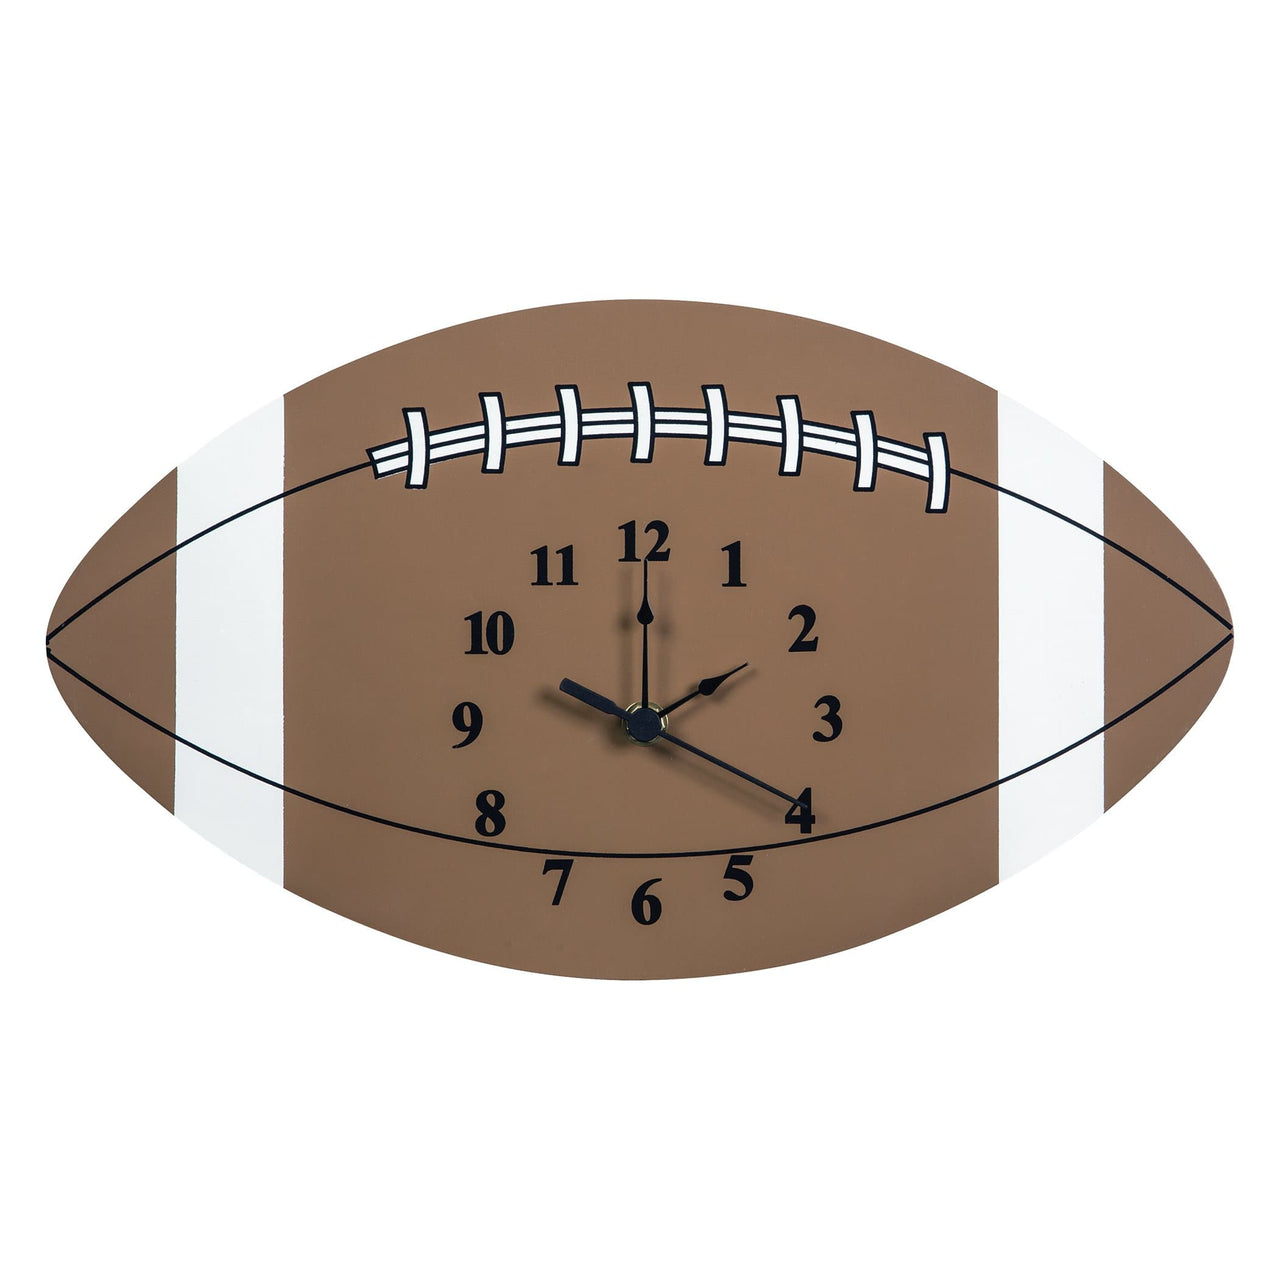 Football Wall Clock